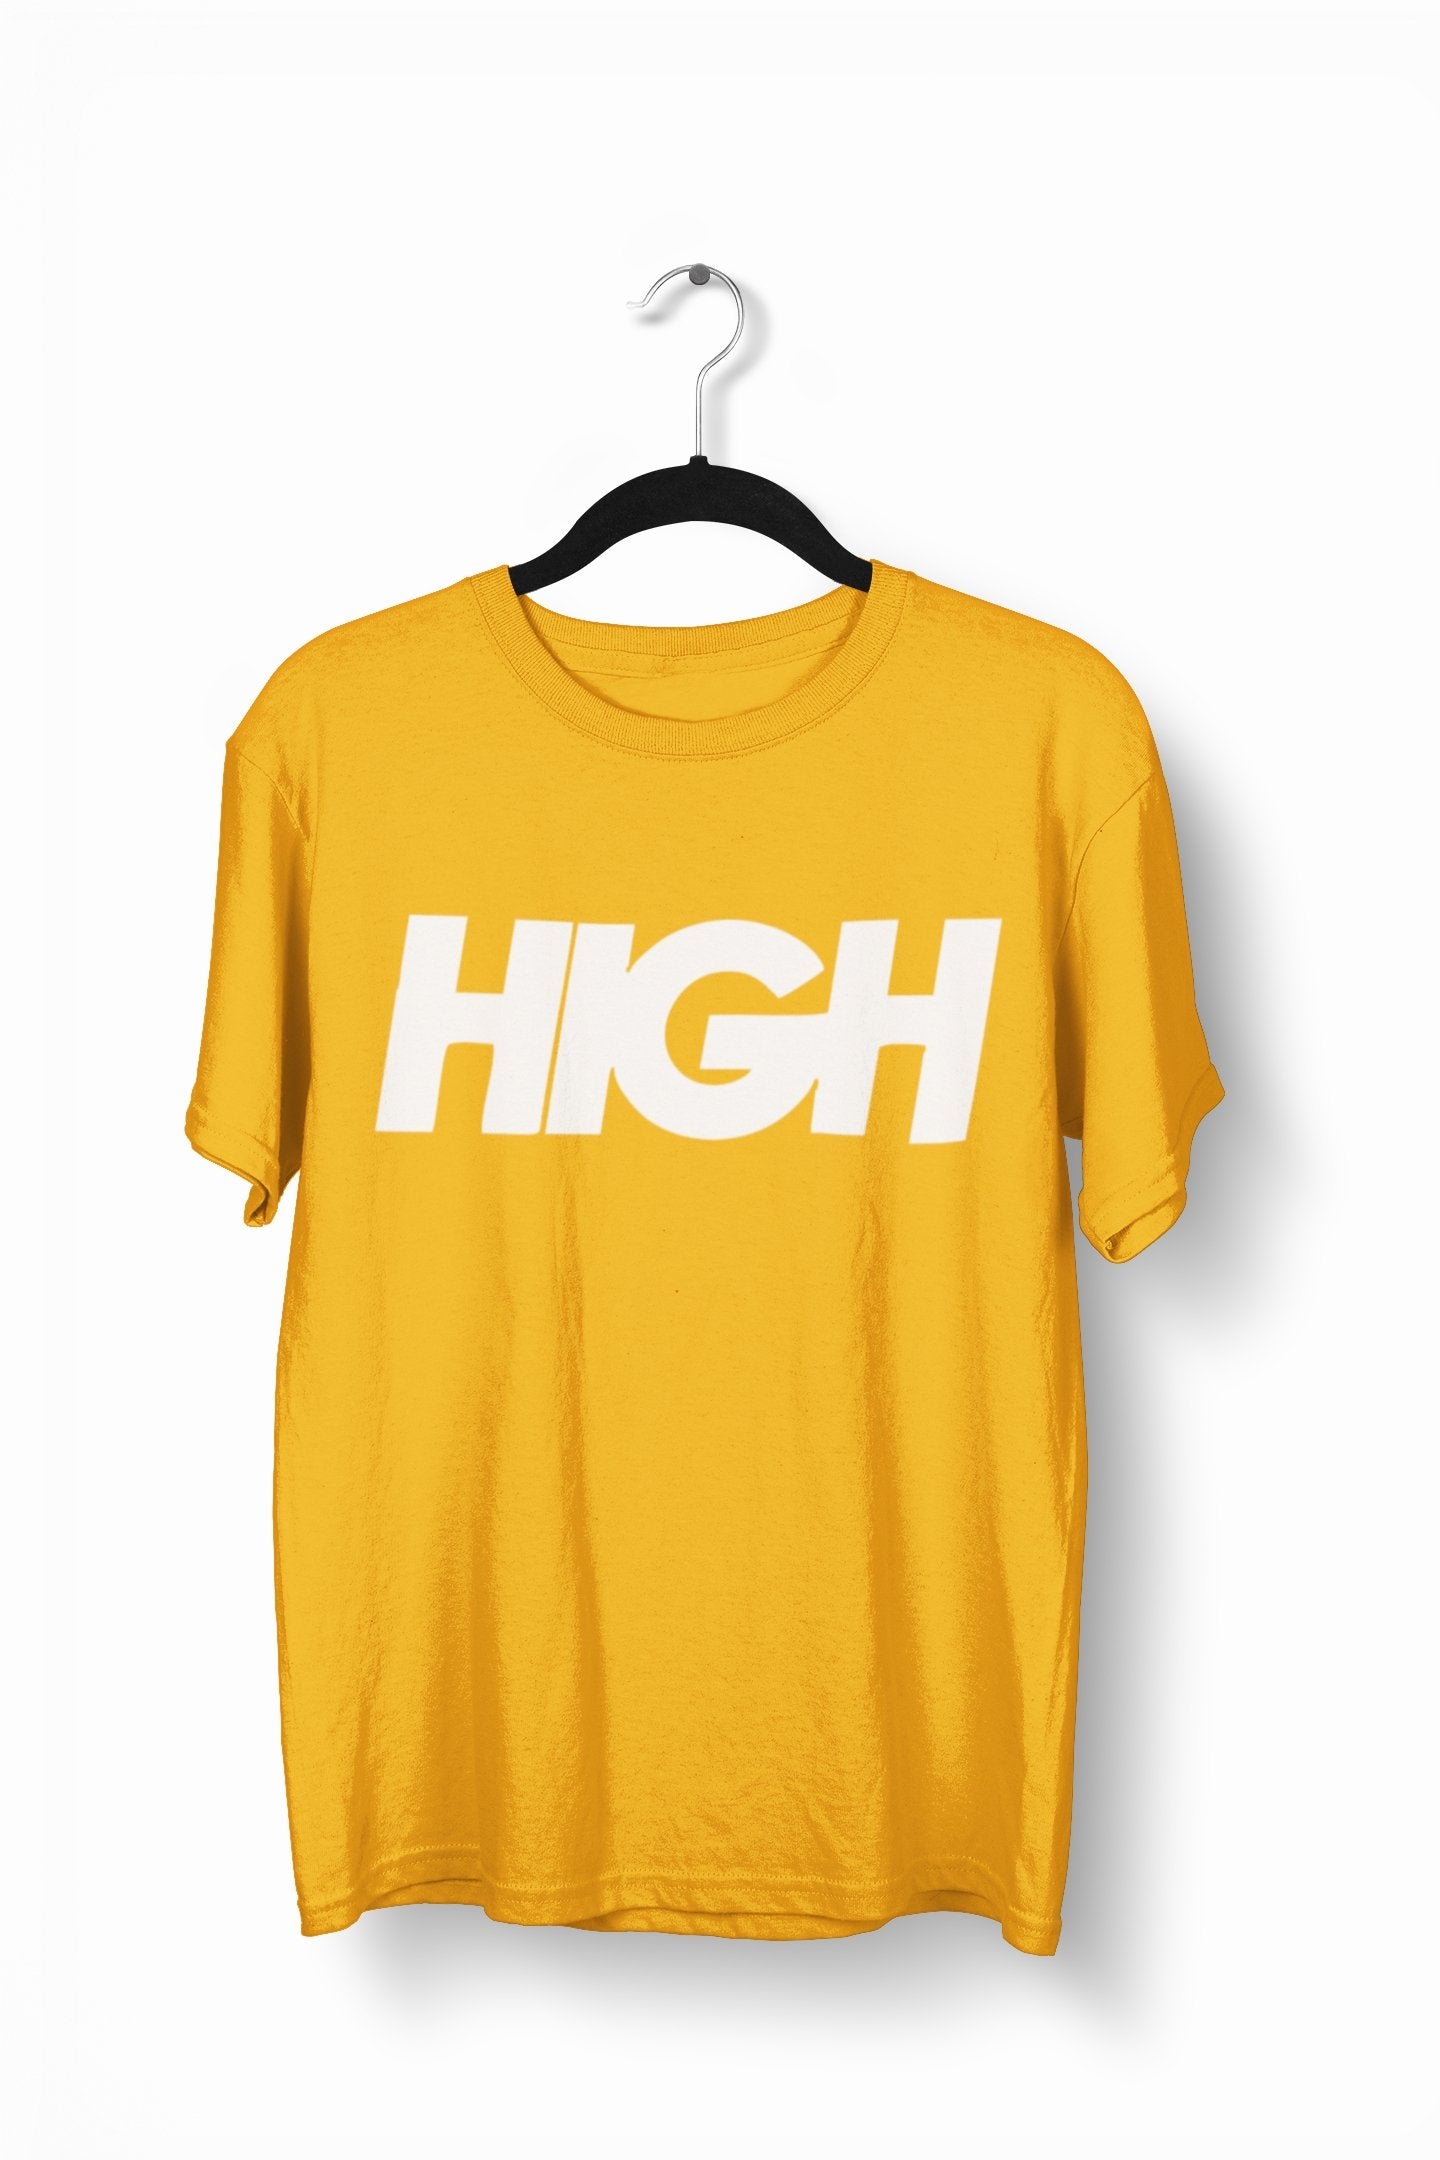 thelegalgang,High Stoner T shirt,MEN.